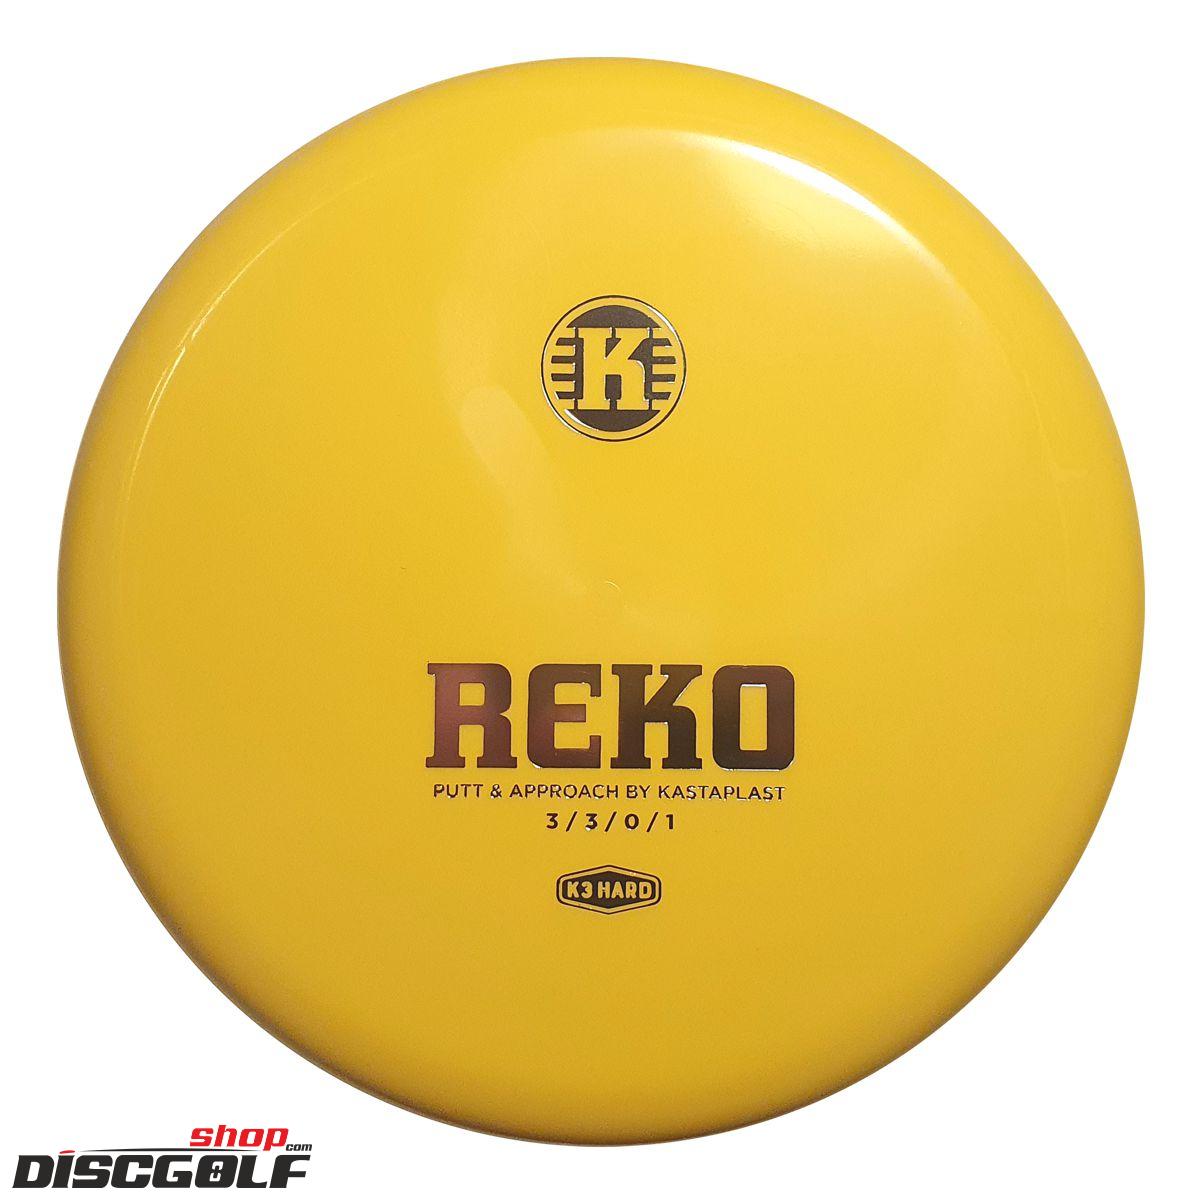 Kastaplast Reko K3 Hard (discgolf)